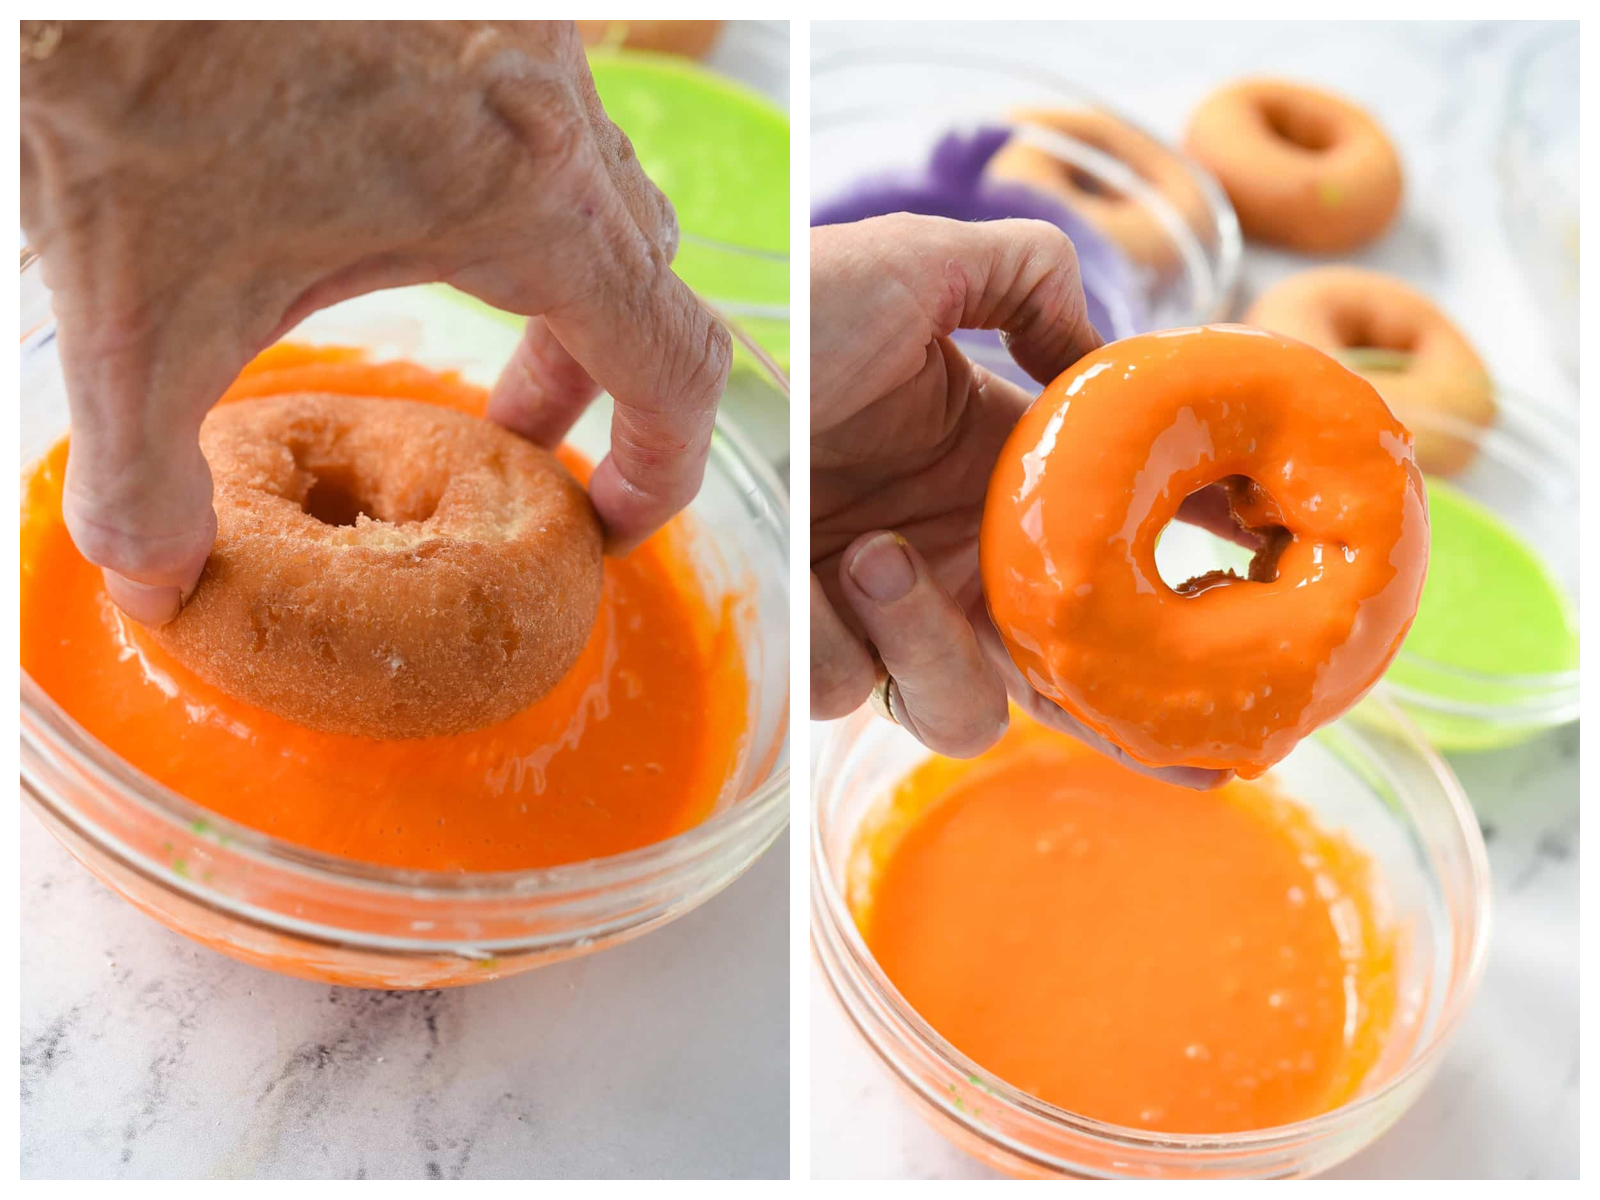 hand dipping a donut into orange glaze